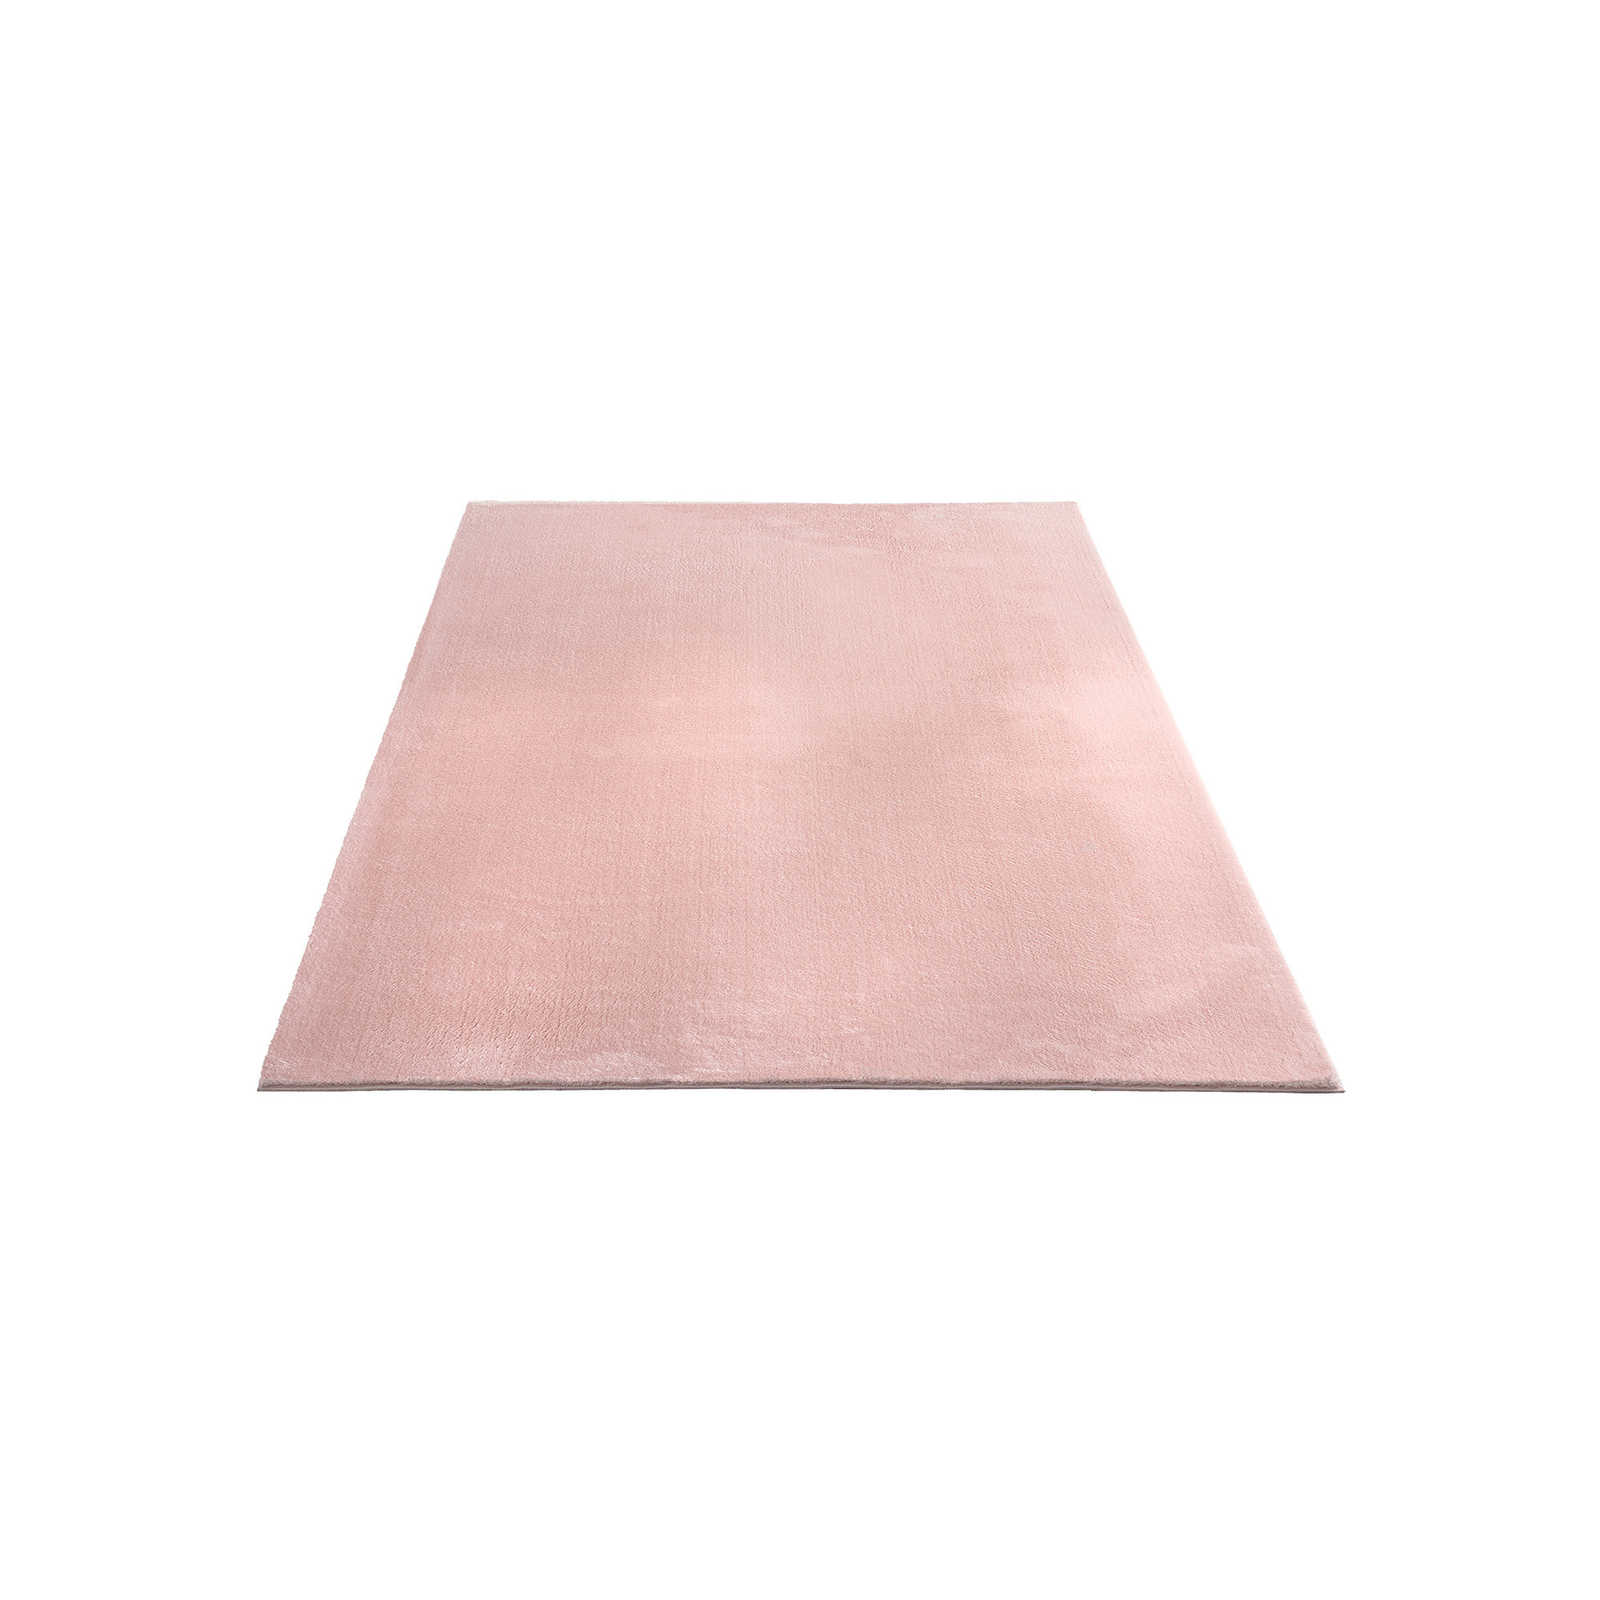 Delicate pile carpet in pink - 230 x 160 cm
